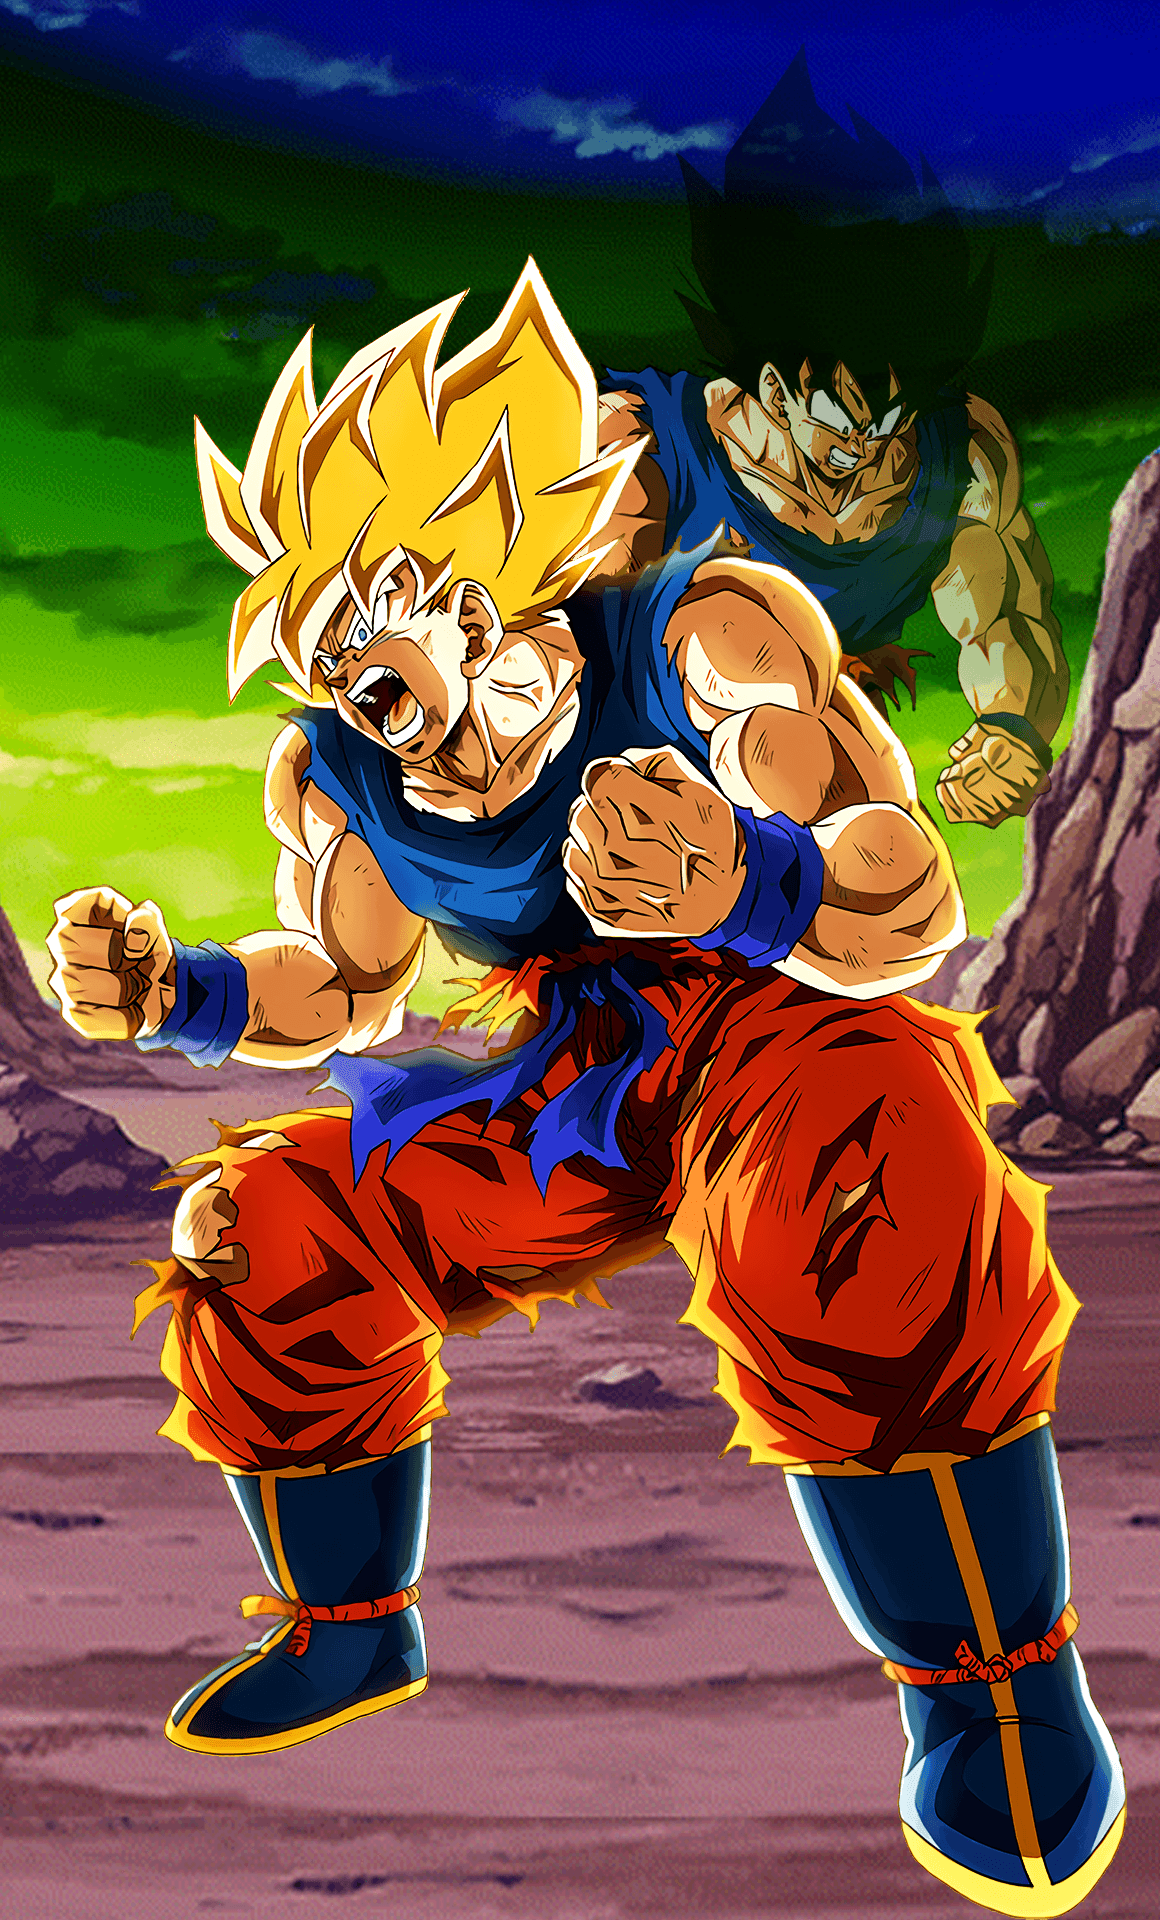 SSJ Goku HD Wallpaper! More versions and HD download below